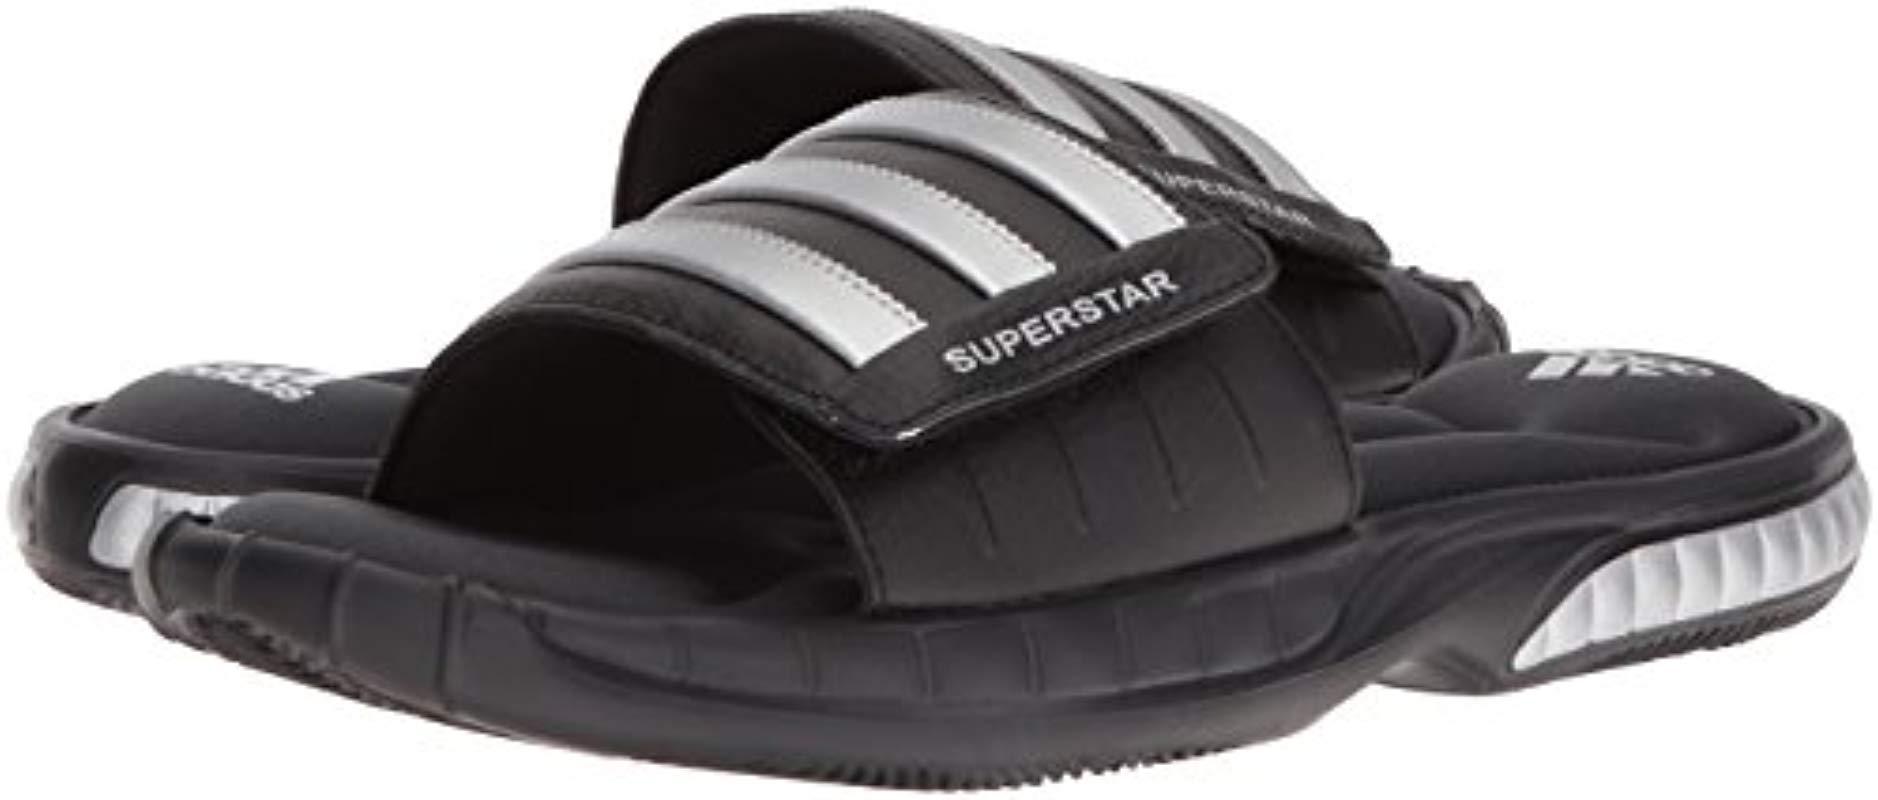 Performance Superstar 3g Slide Sandal 